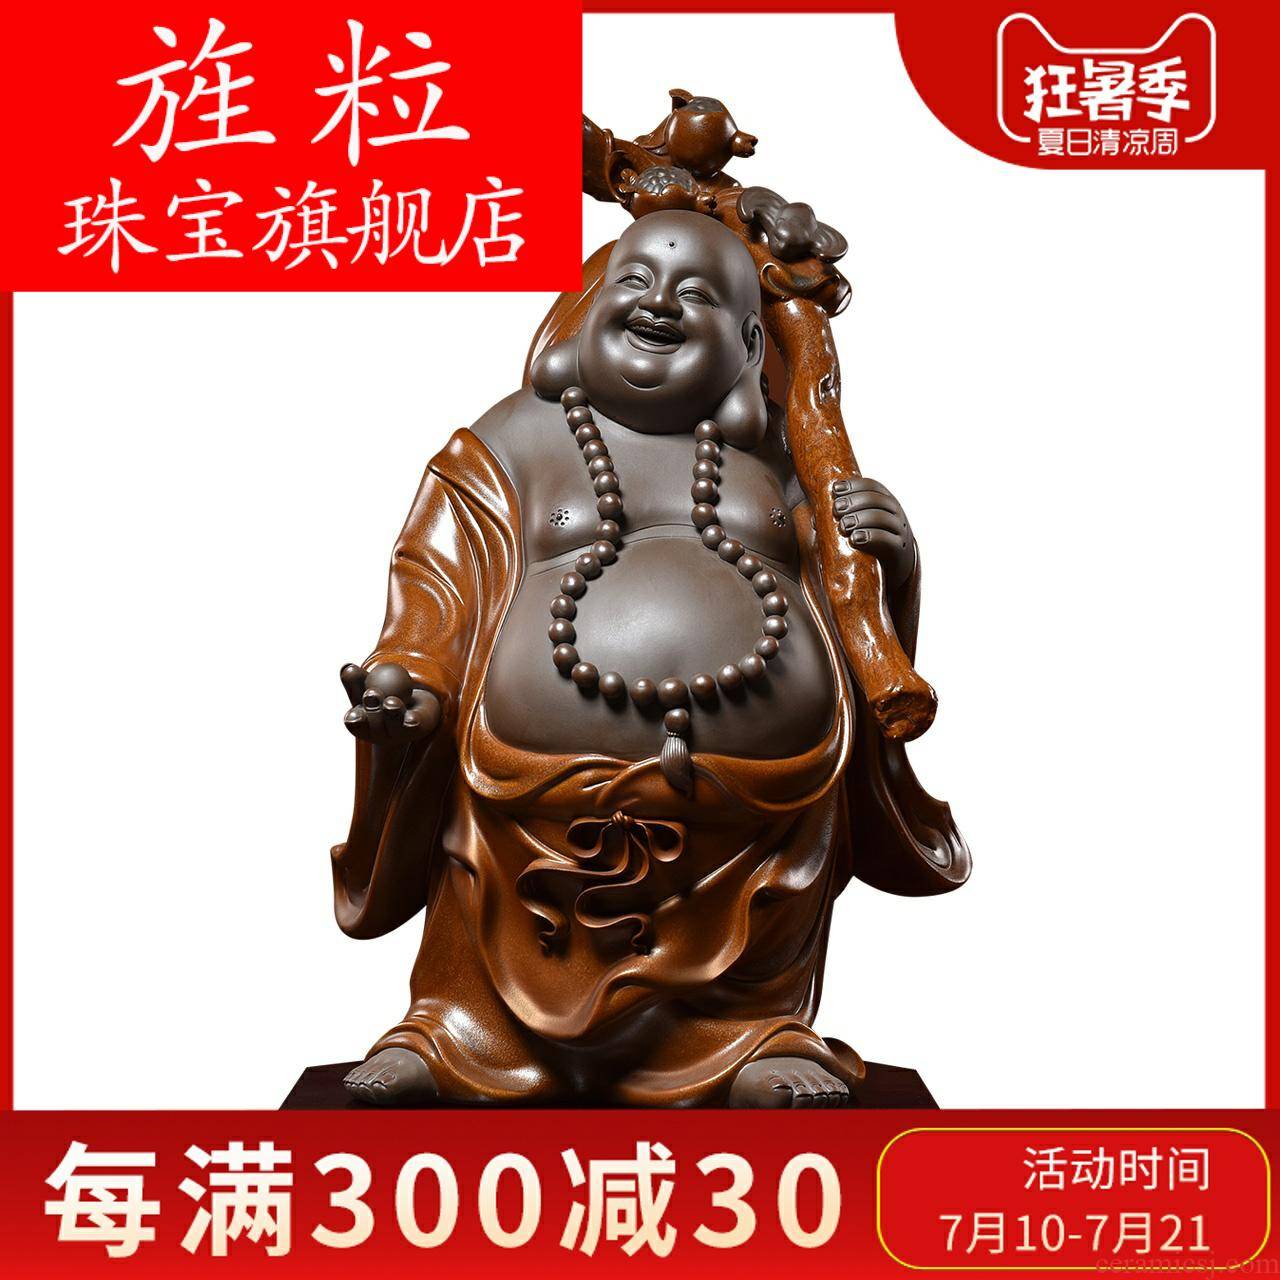 Bm ceramic smiling Buddha maitreya Buddha furnishing articles of Chinese style household housewarming gift many children the H10-27